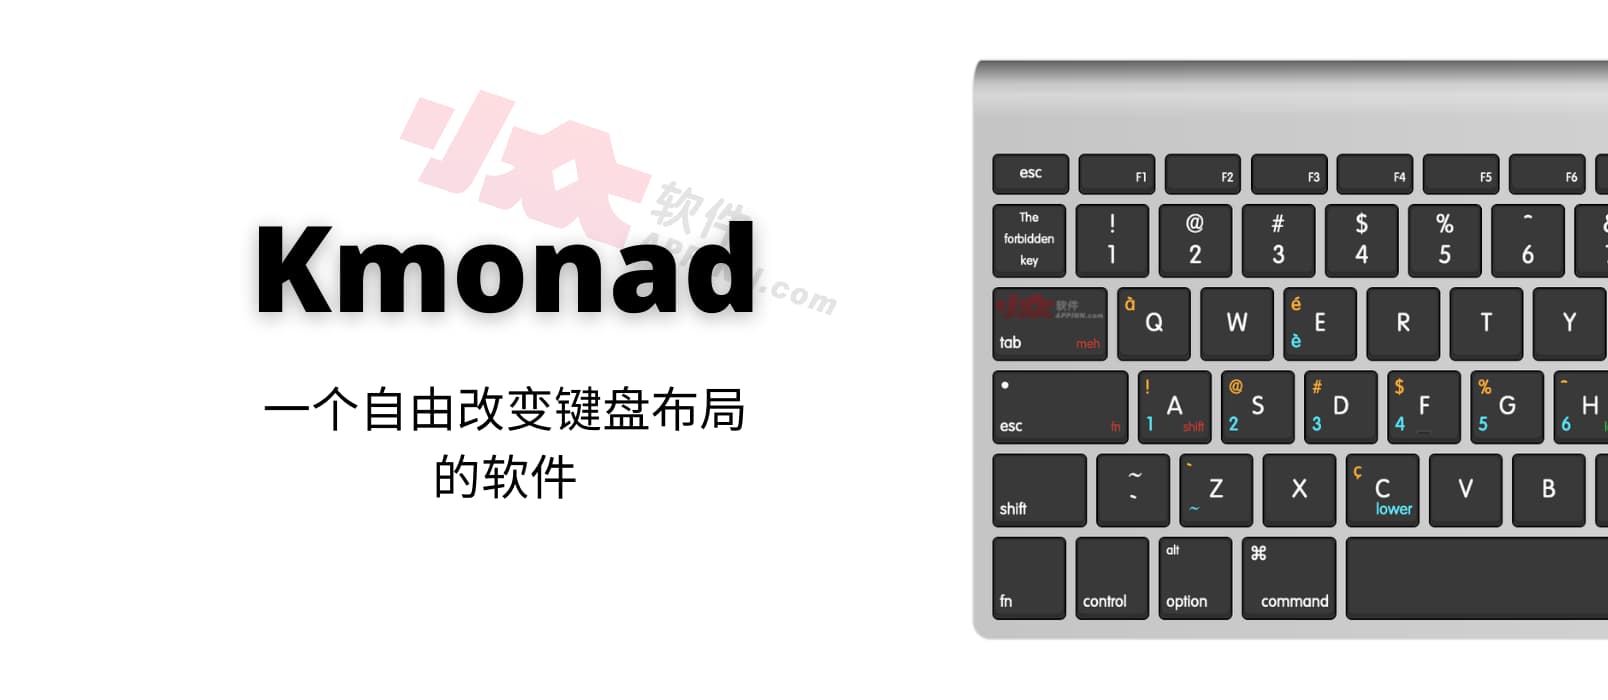 Kmonad，一个自由改变键盘布局的软件